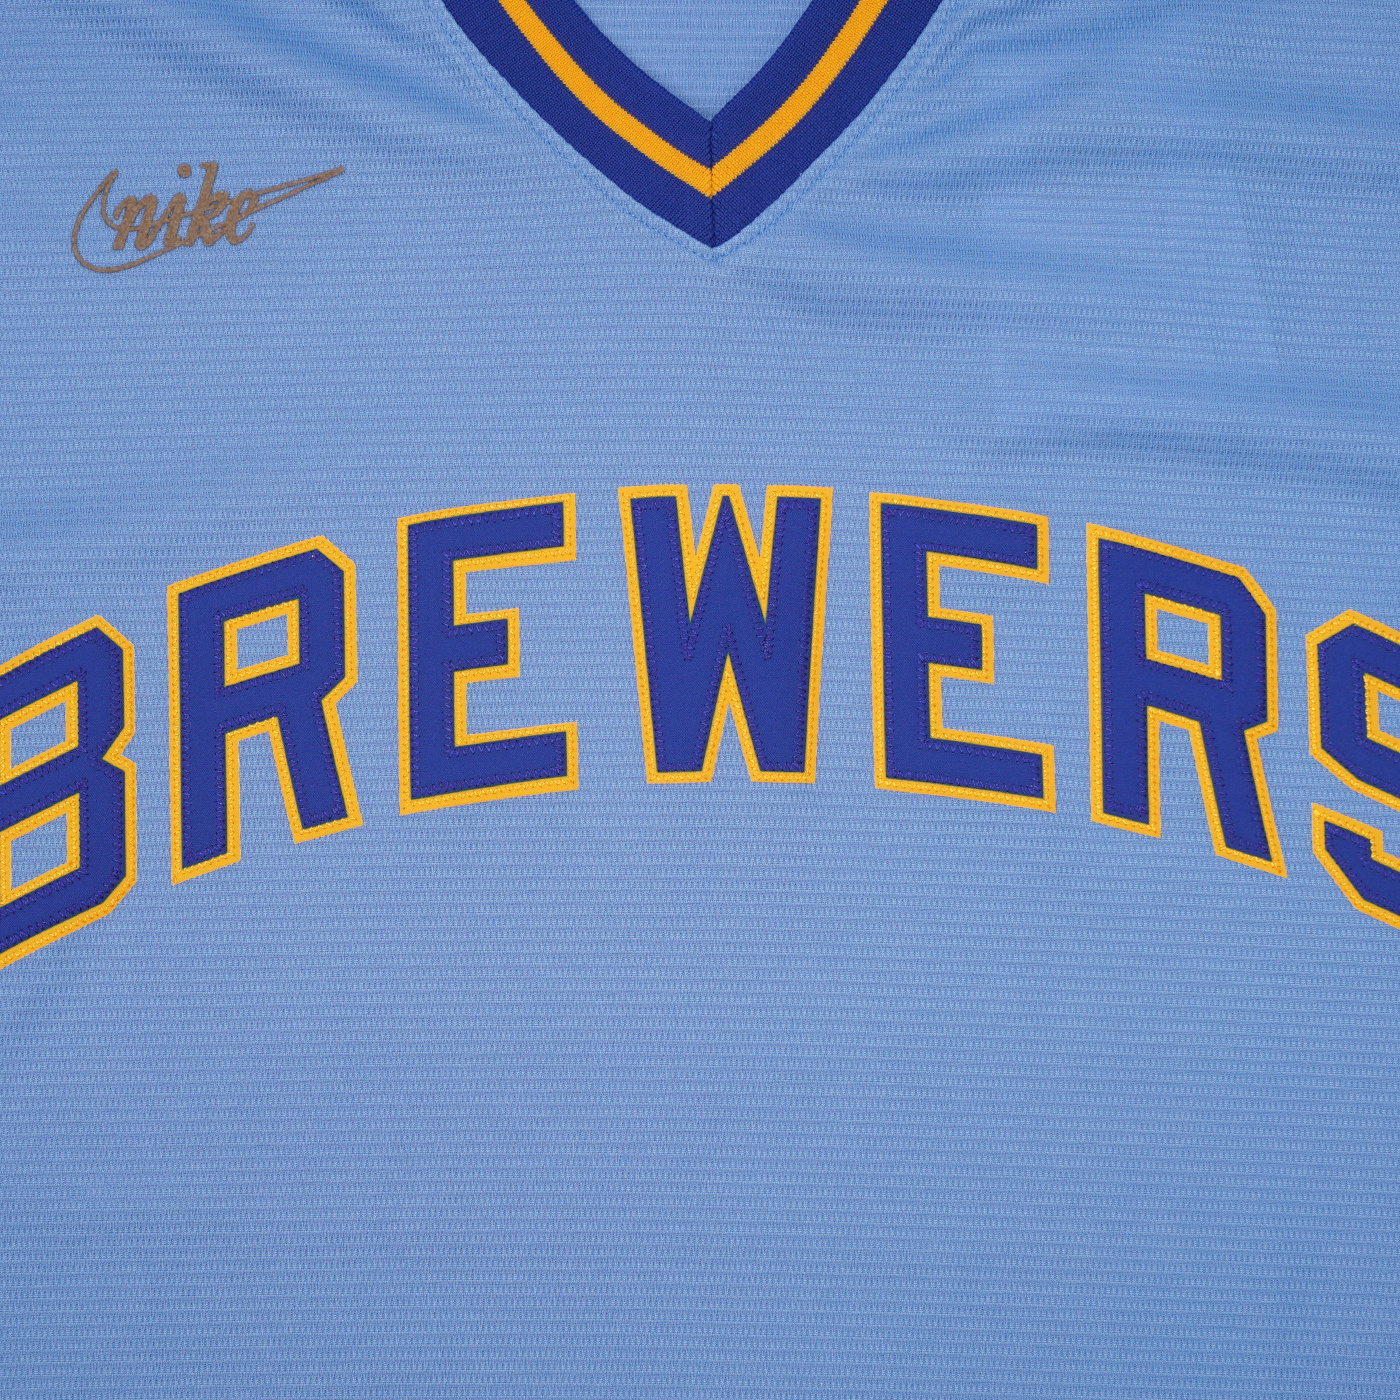 Milwaukee Brewers Throwback Jerseys, Brewers Retro & Vintage